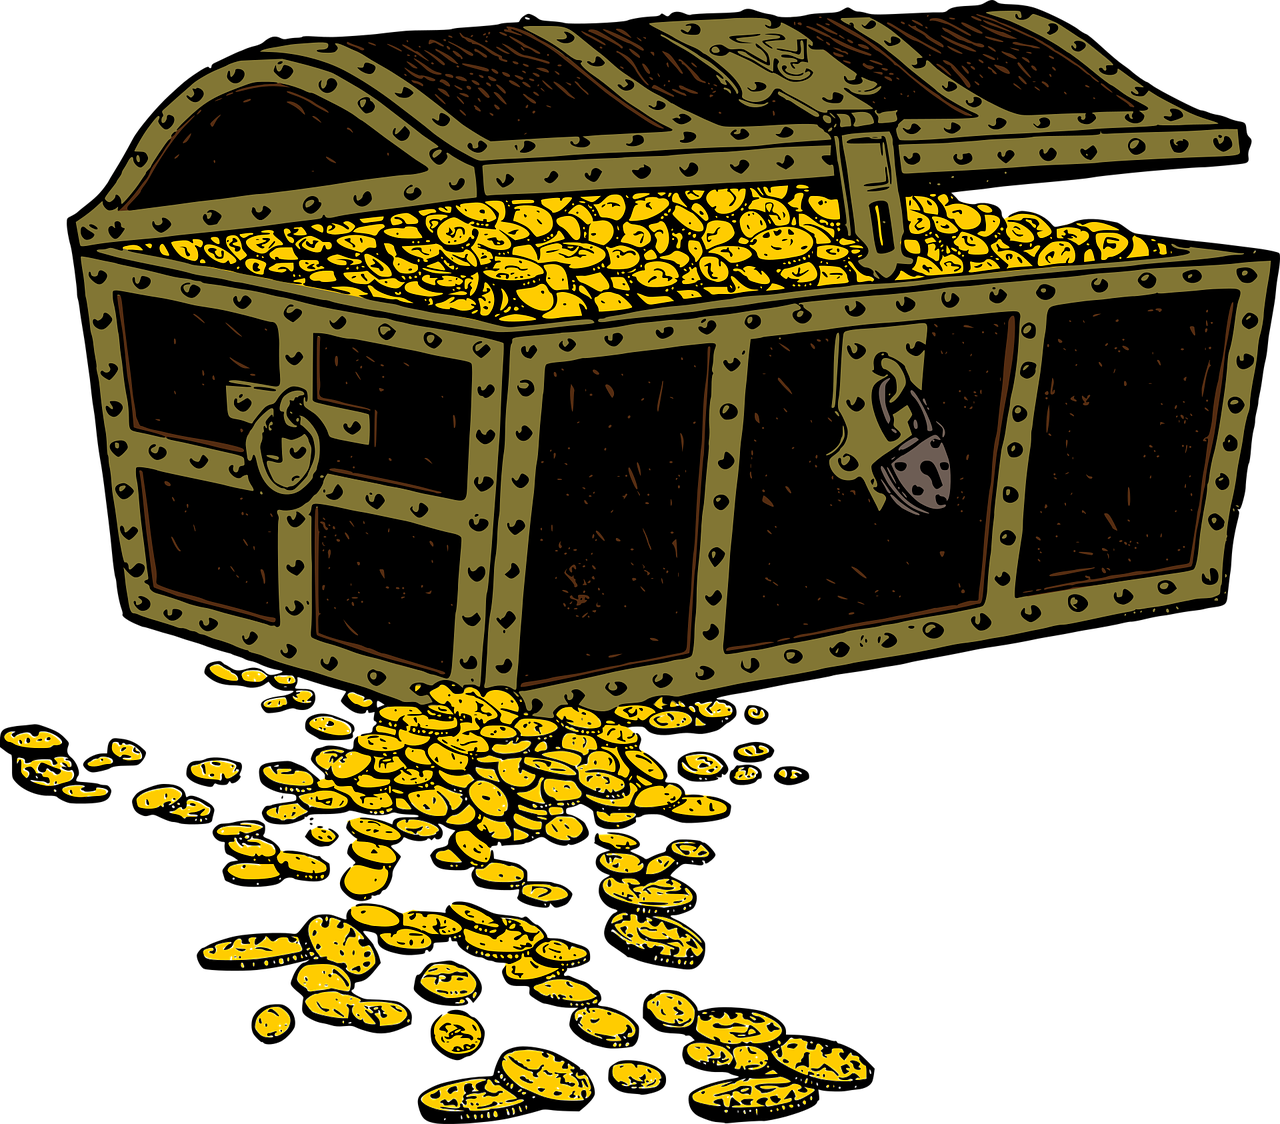 Treasure chest spilling gold.